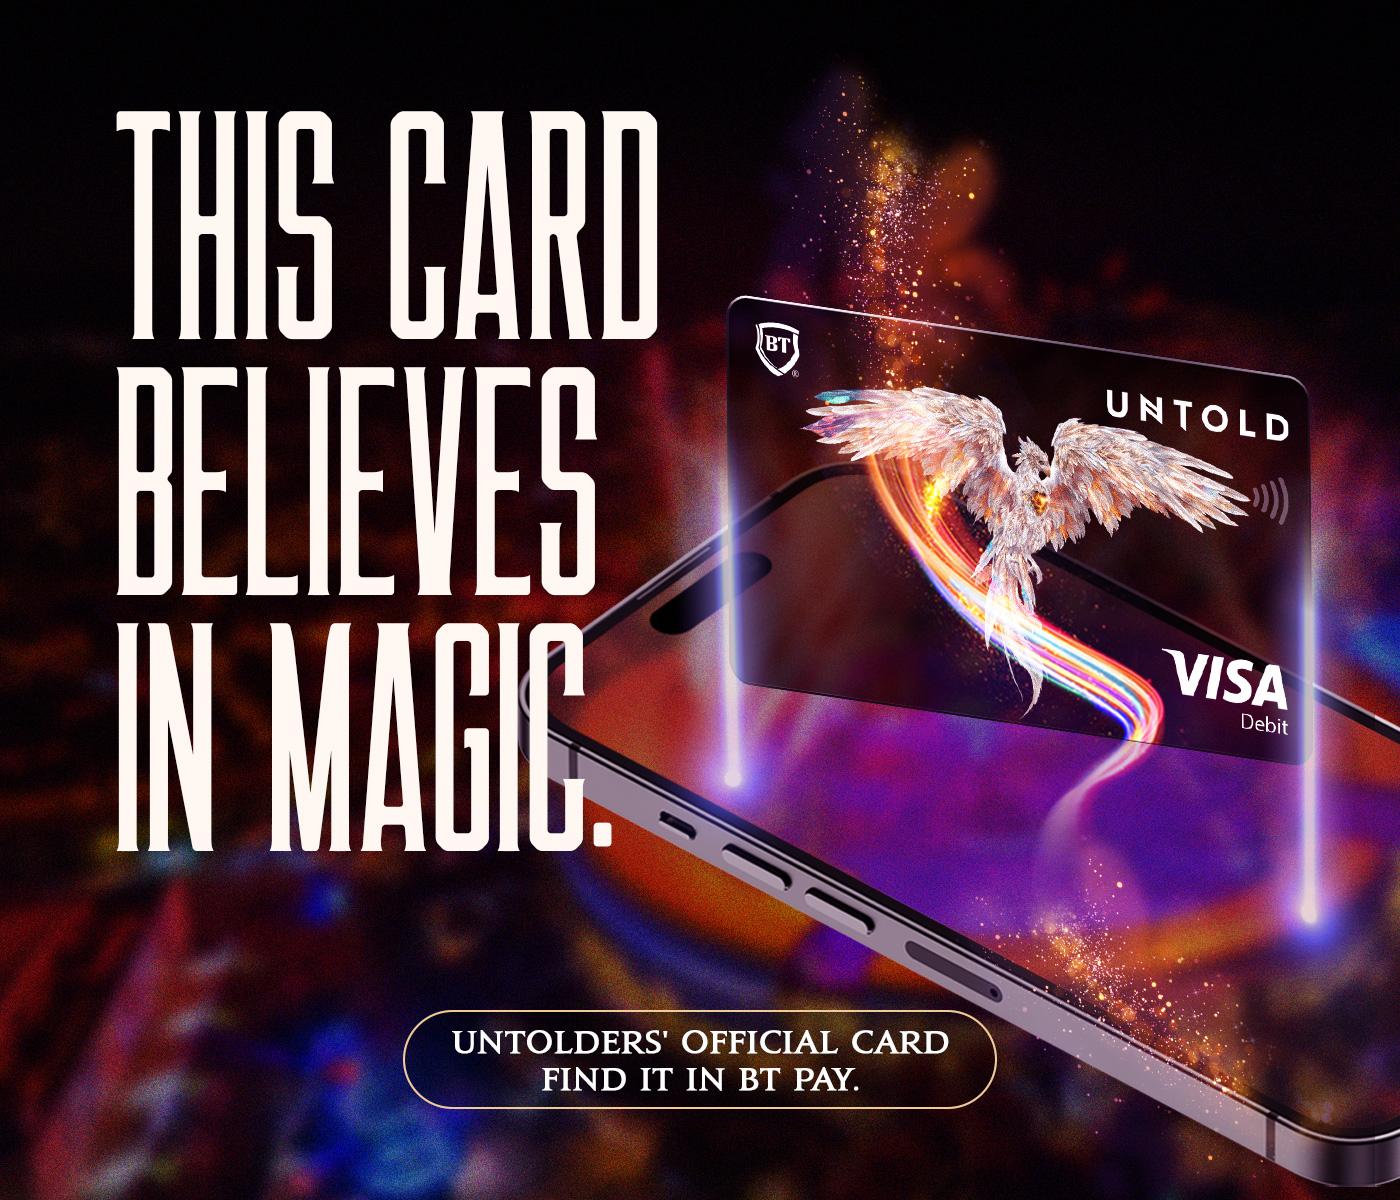 Cardul BT Visa UNTOLD_2.jpg